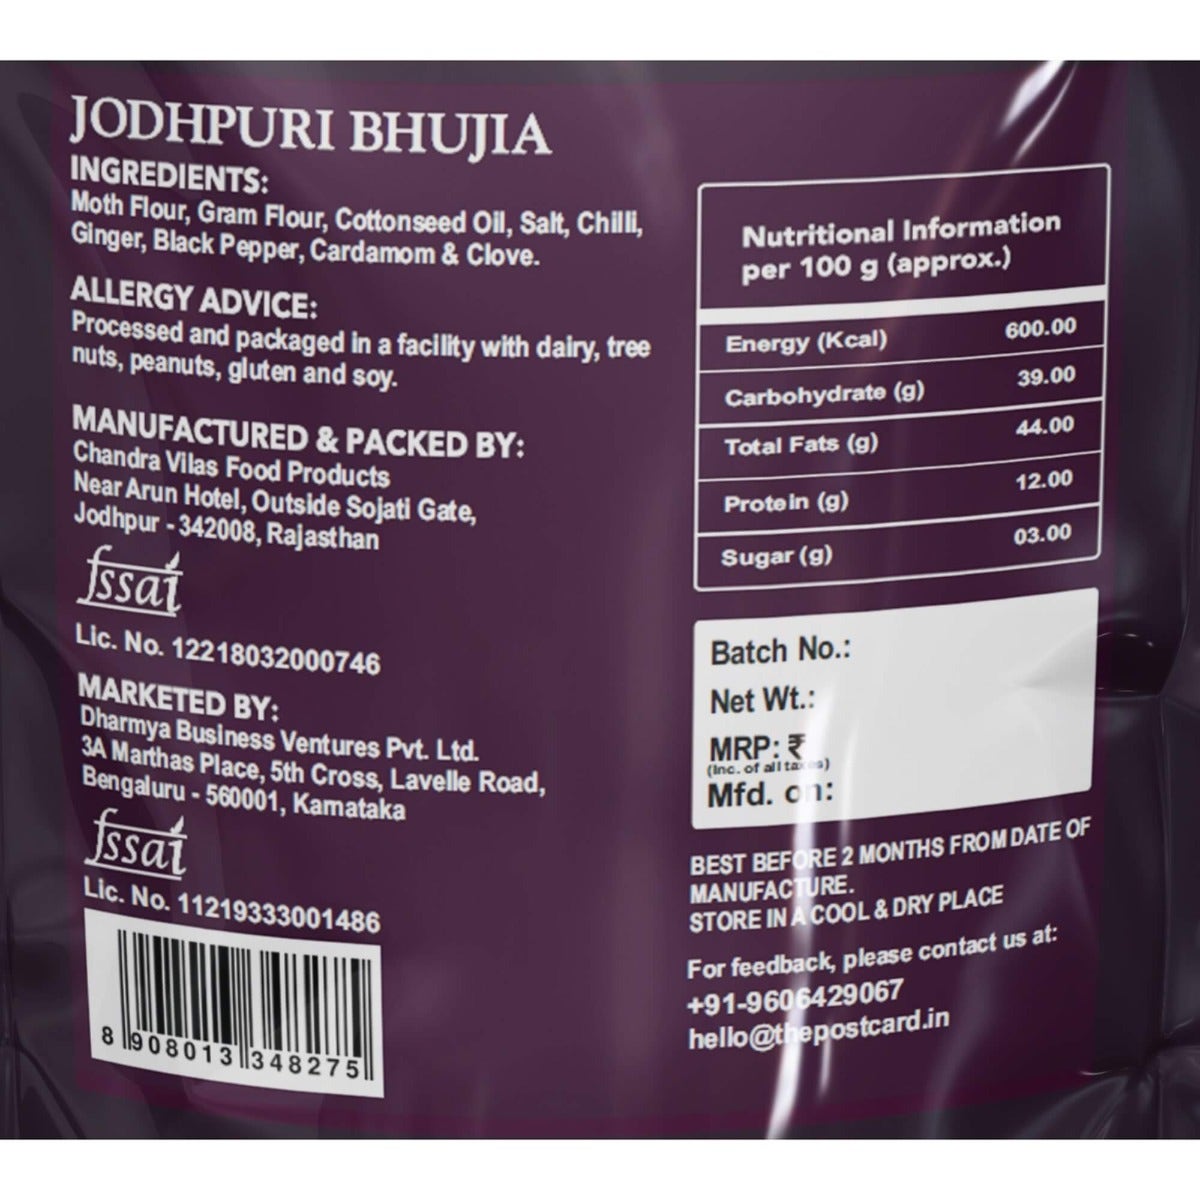 jodhpuri bhujia ingredients